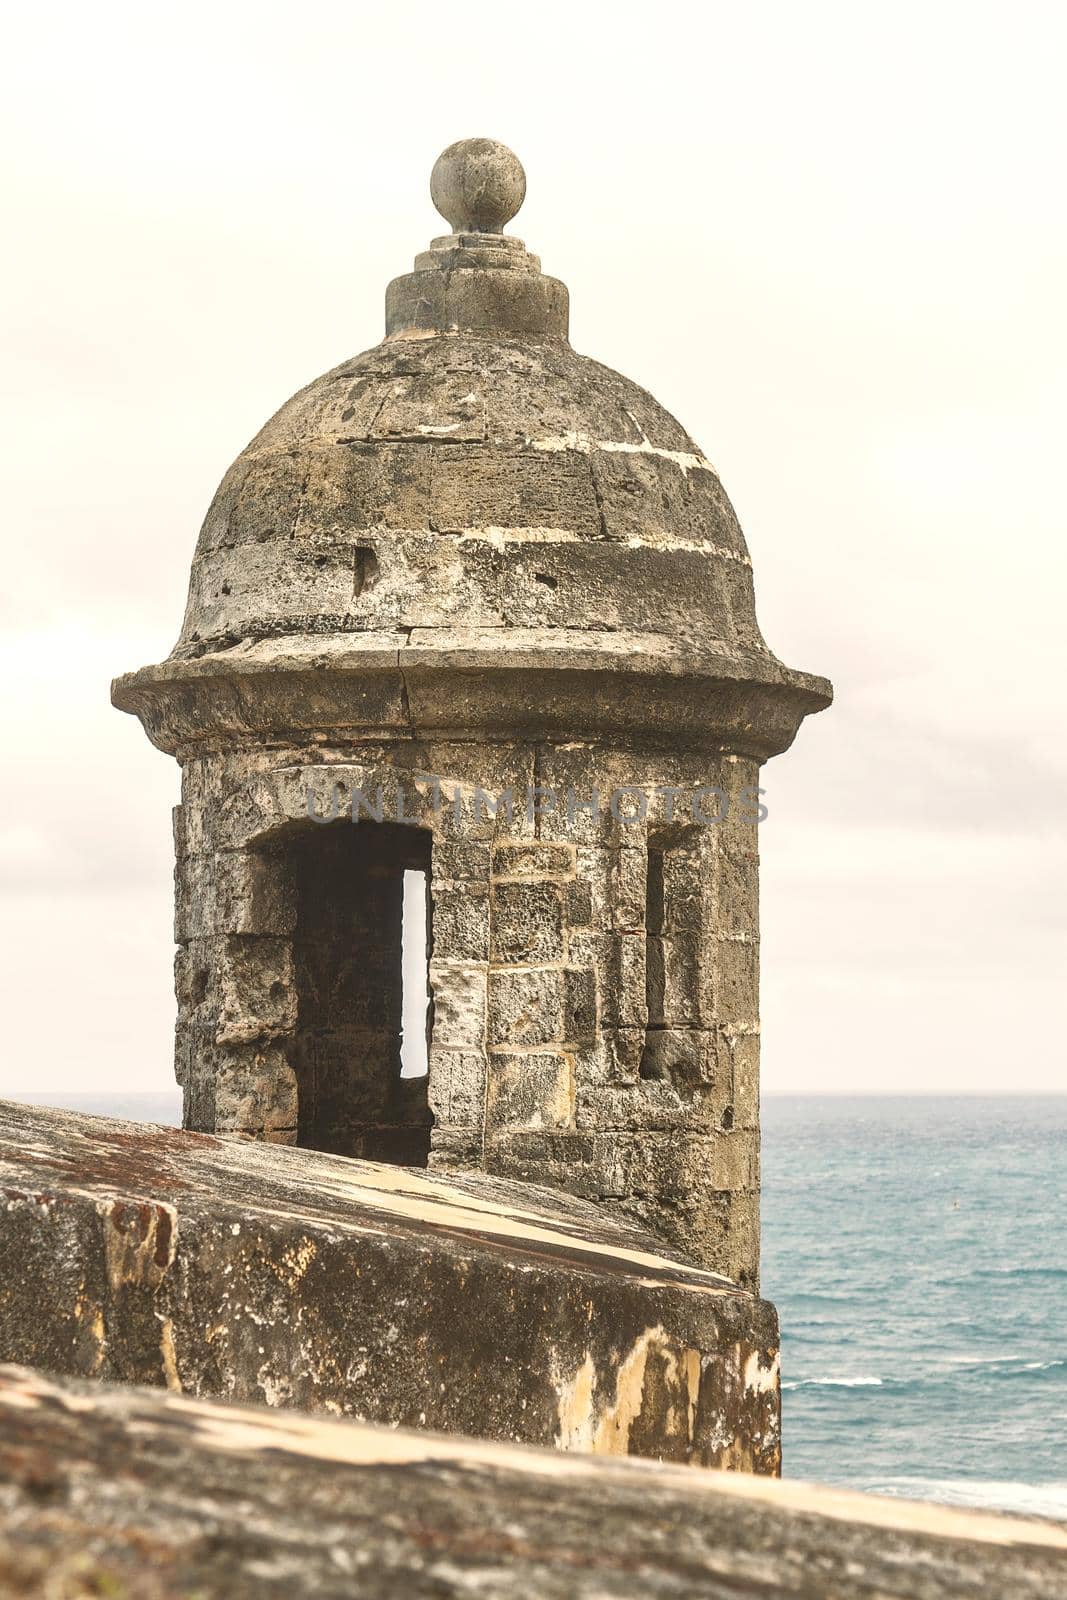 Sentry box overlooking the Atlantic Ocean at 'El Morro' (Castillo San Felipe del Morro) San Juan, Puerto Rico